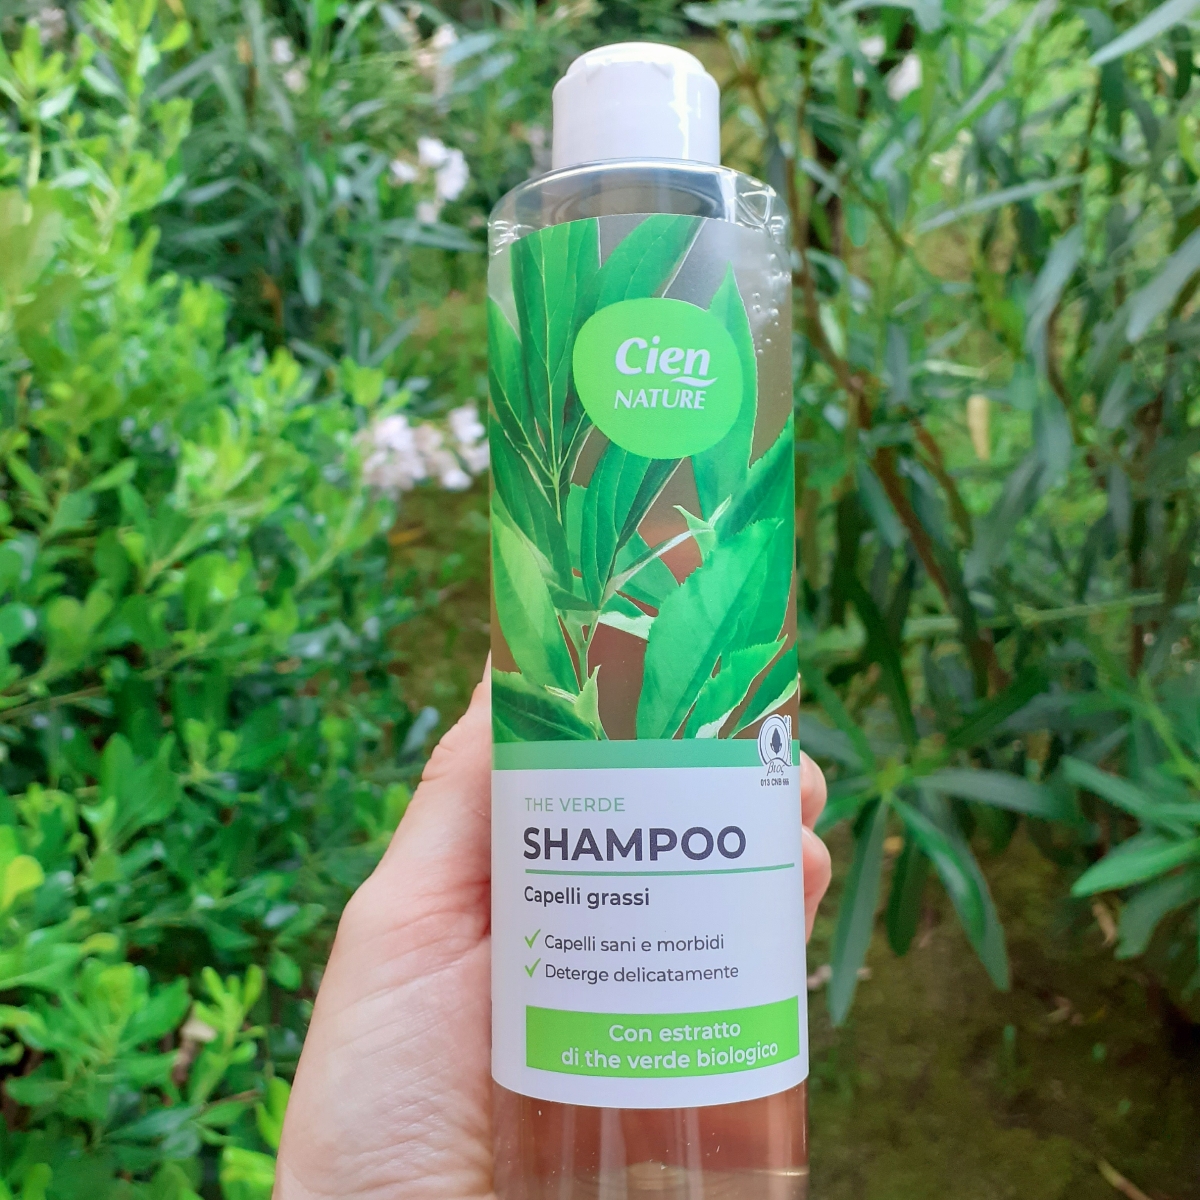 Cien nature Shampoo thè verde Reviews | abillion